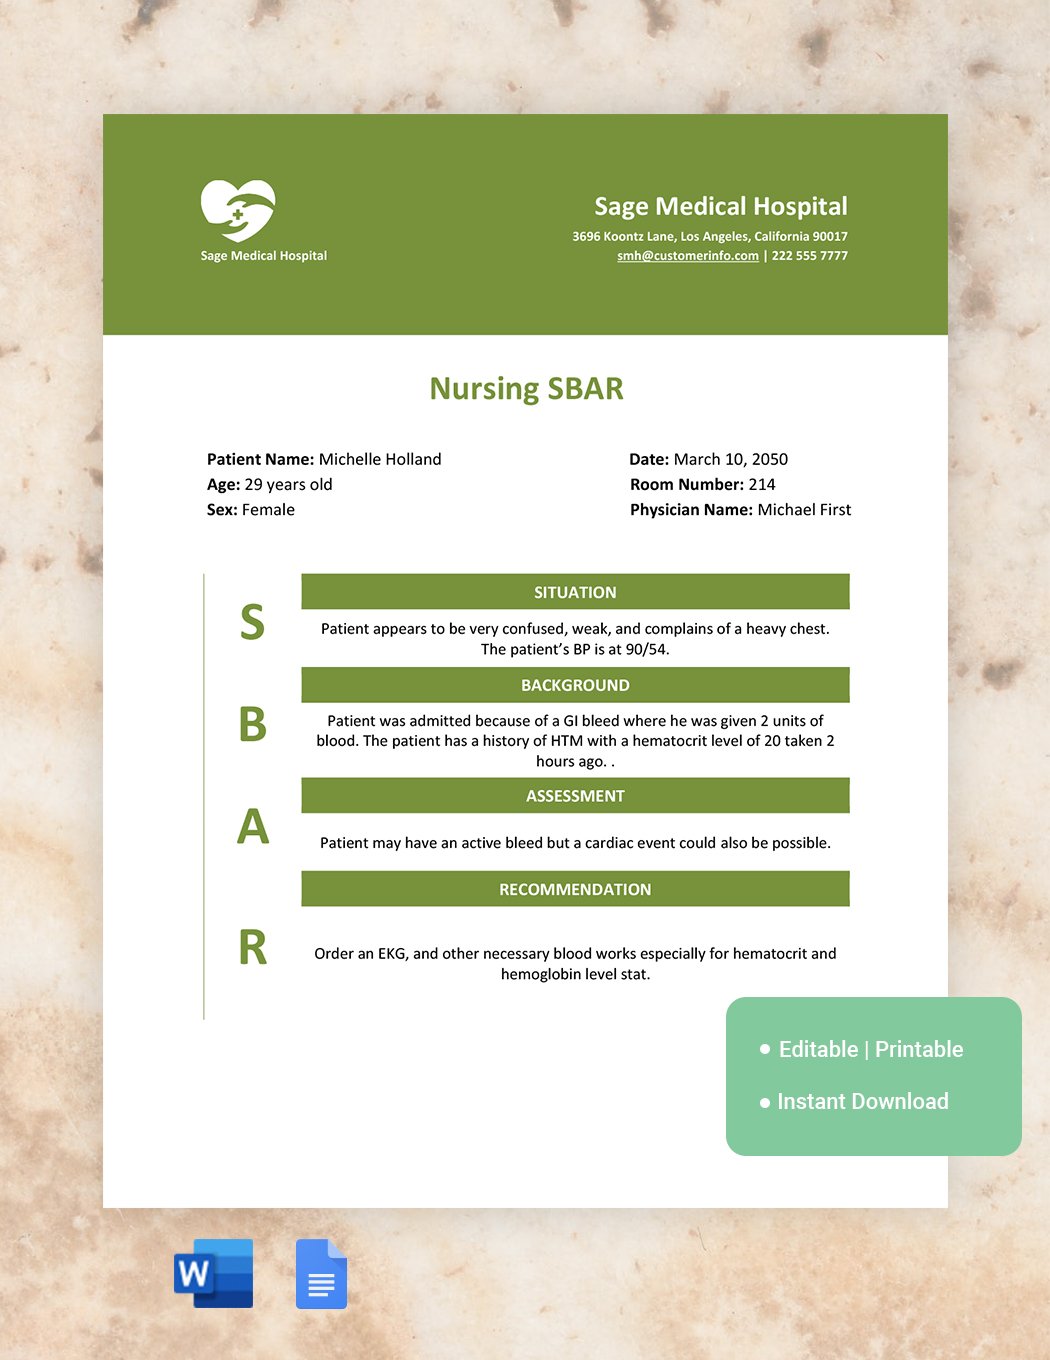 Nursing SBAR Template Download in Word, Google Docs